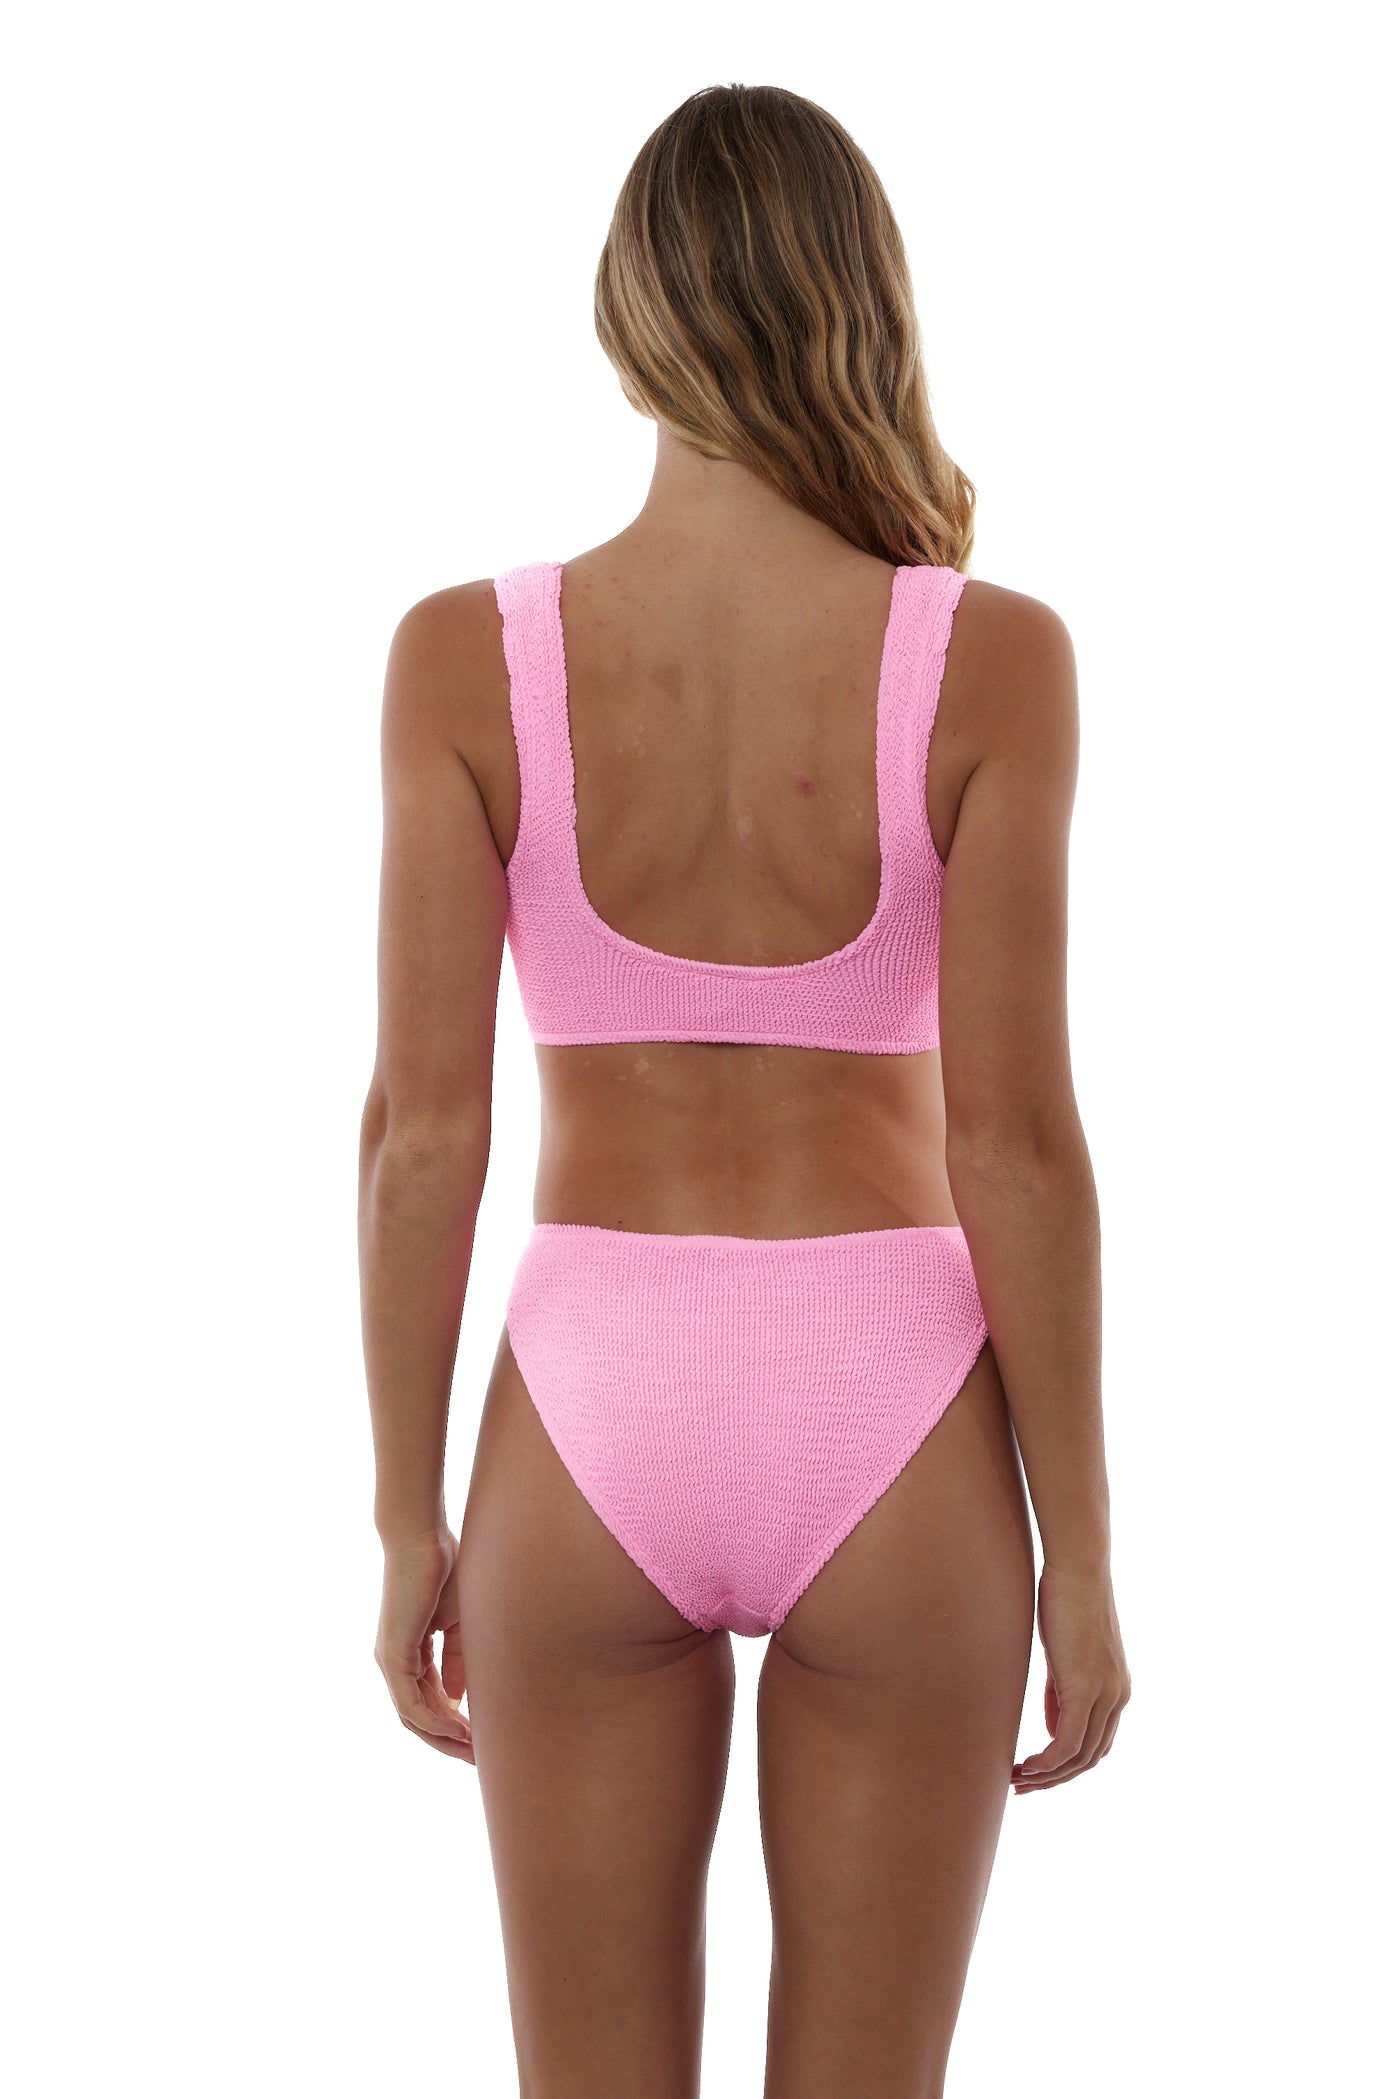 Cancun Classic Seamless One Size Bikini TOP ONLY (Strawberry Pink)